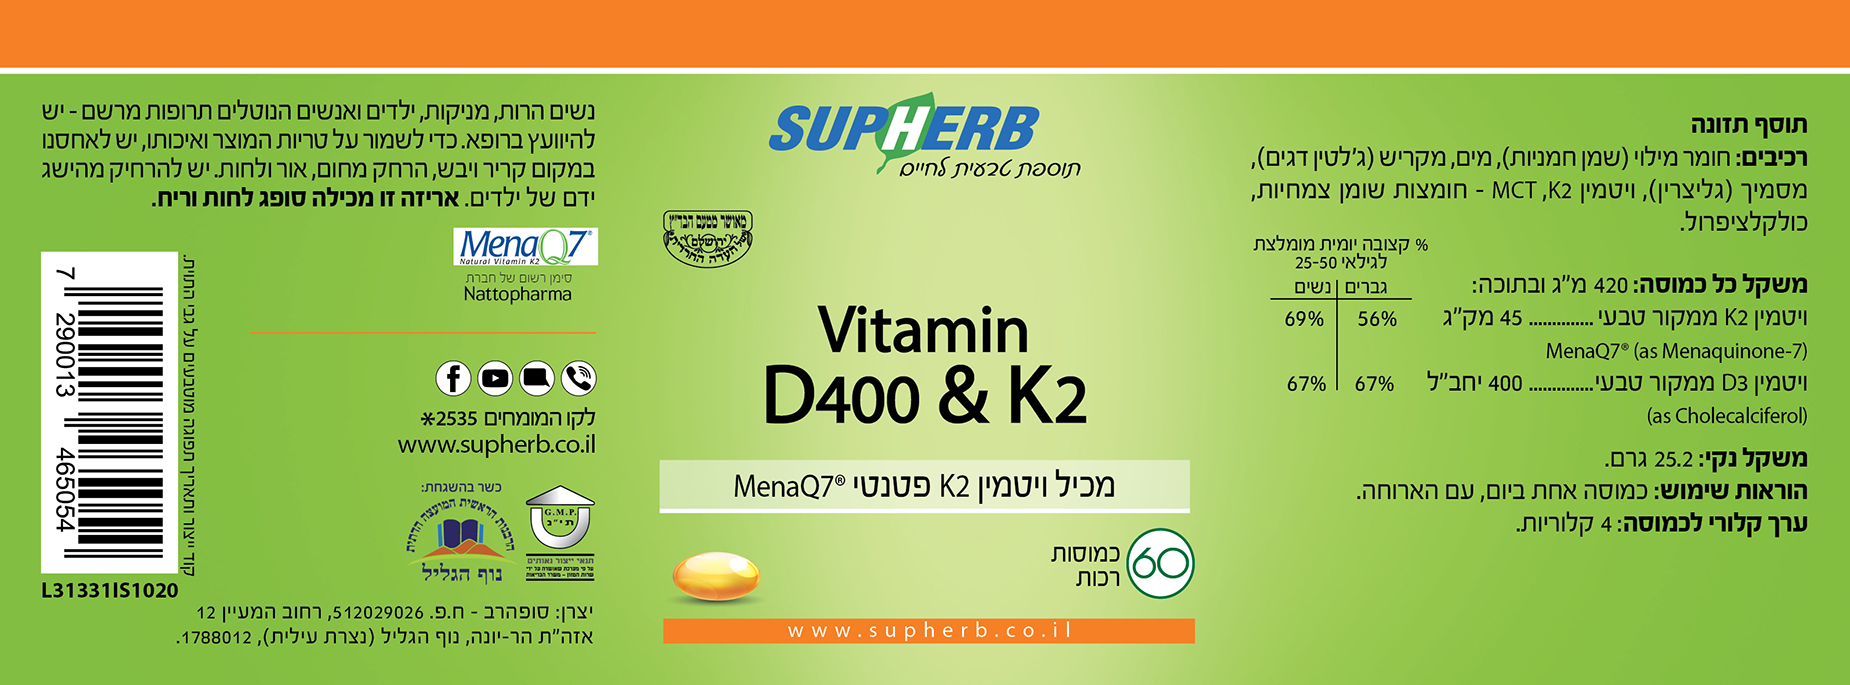 ויטמין K2 & ויטמין D3 במינון 400 יחב"ל